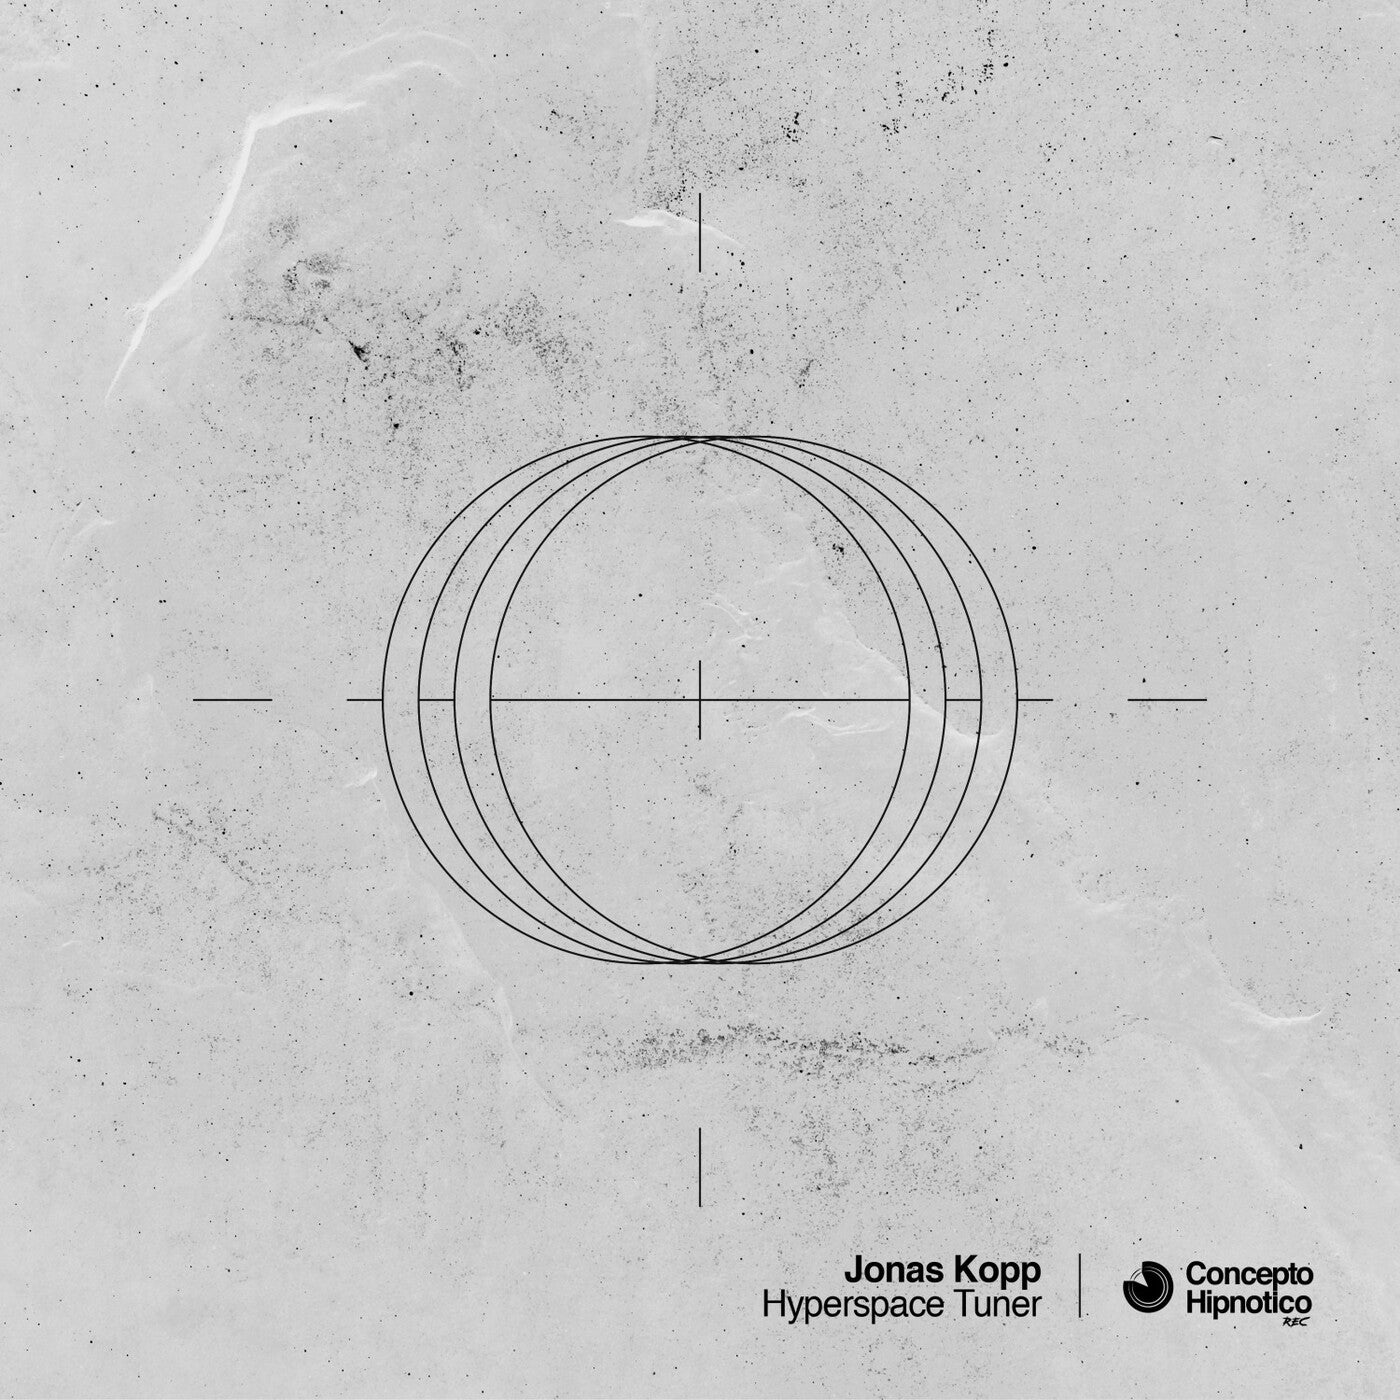 Cover - Jonas Kopp - 0vt 0f Th3 2y2t3m (Original Mix)